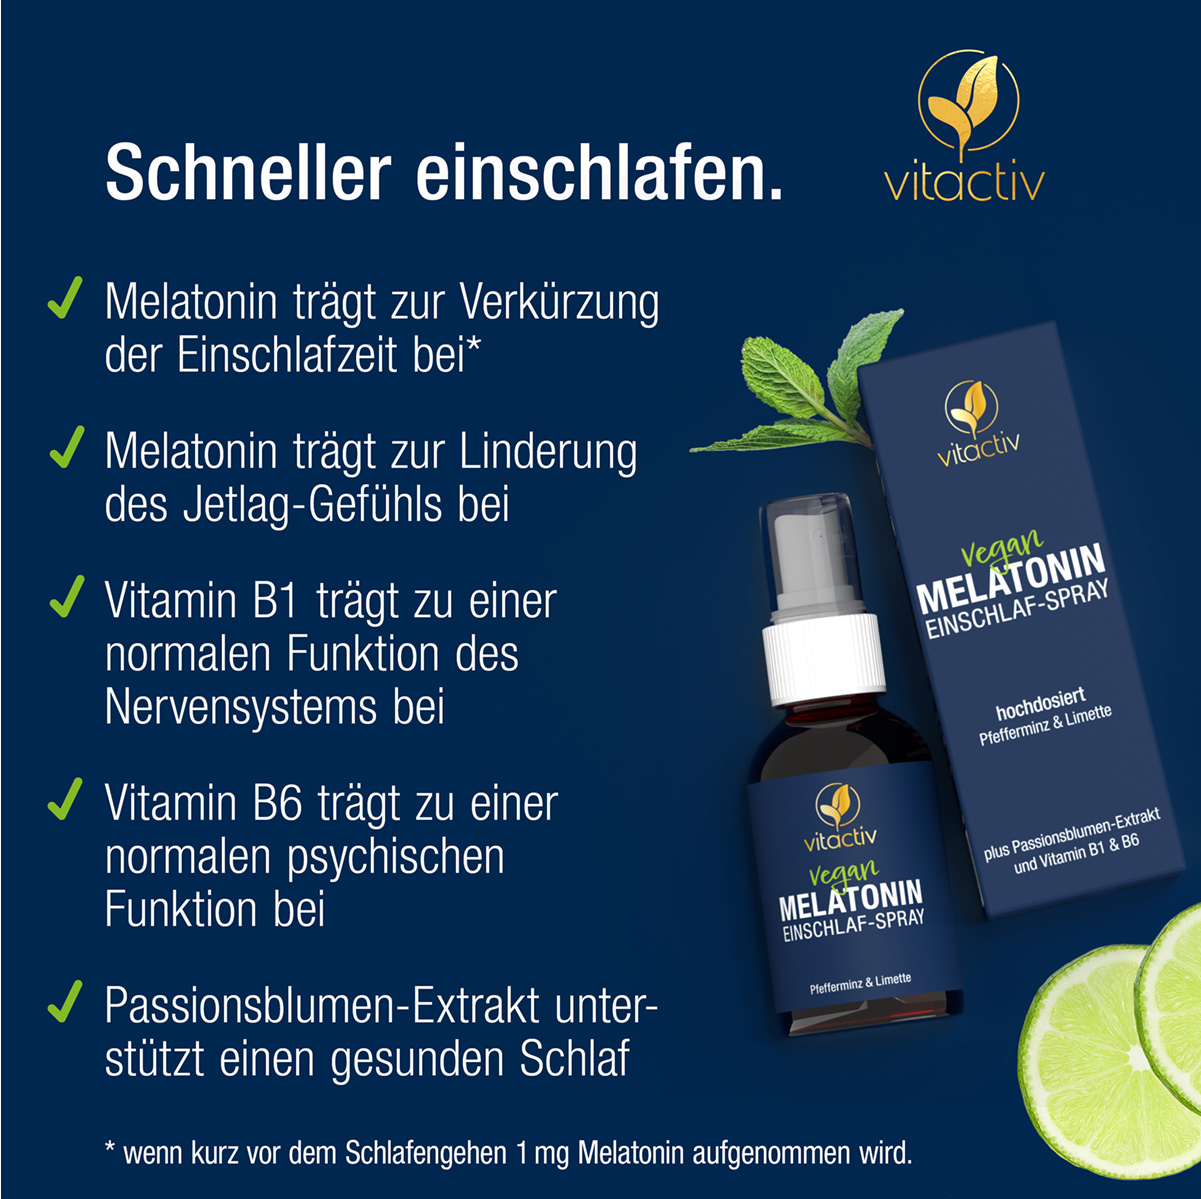 Melatonin Einschlaf-Spray - Pfefferminz & Limette - 50 ml